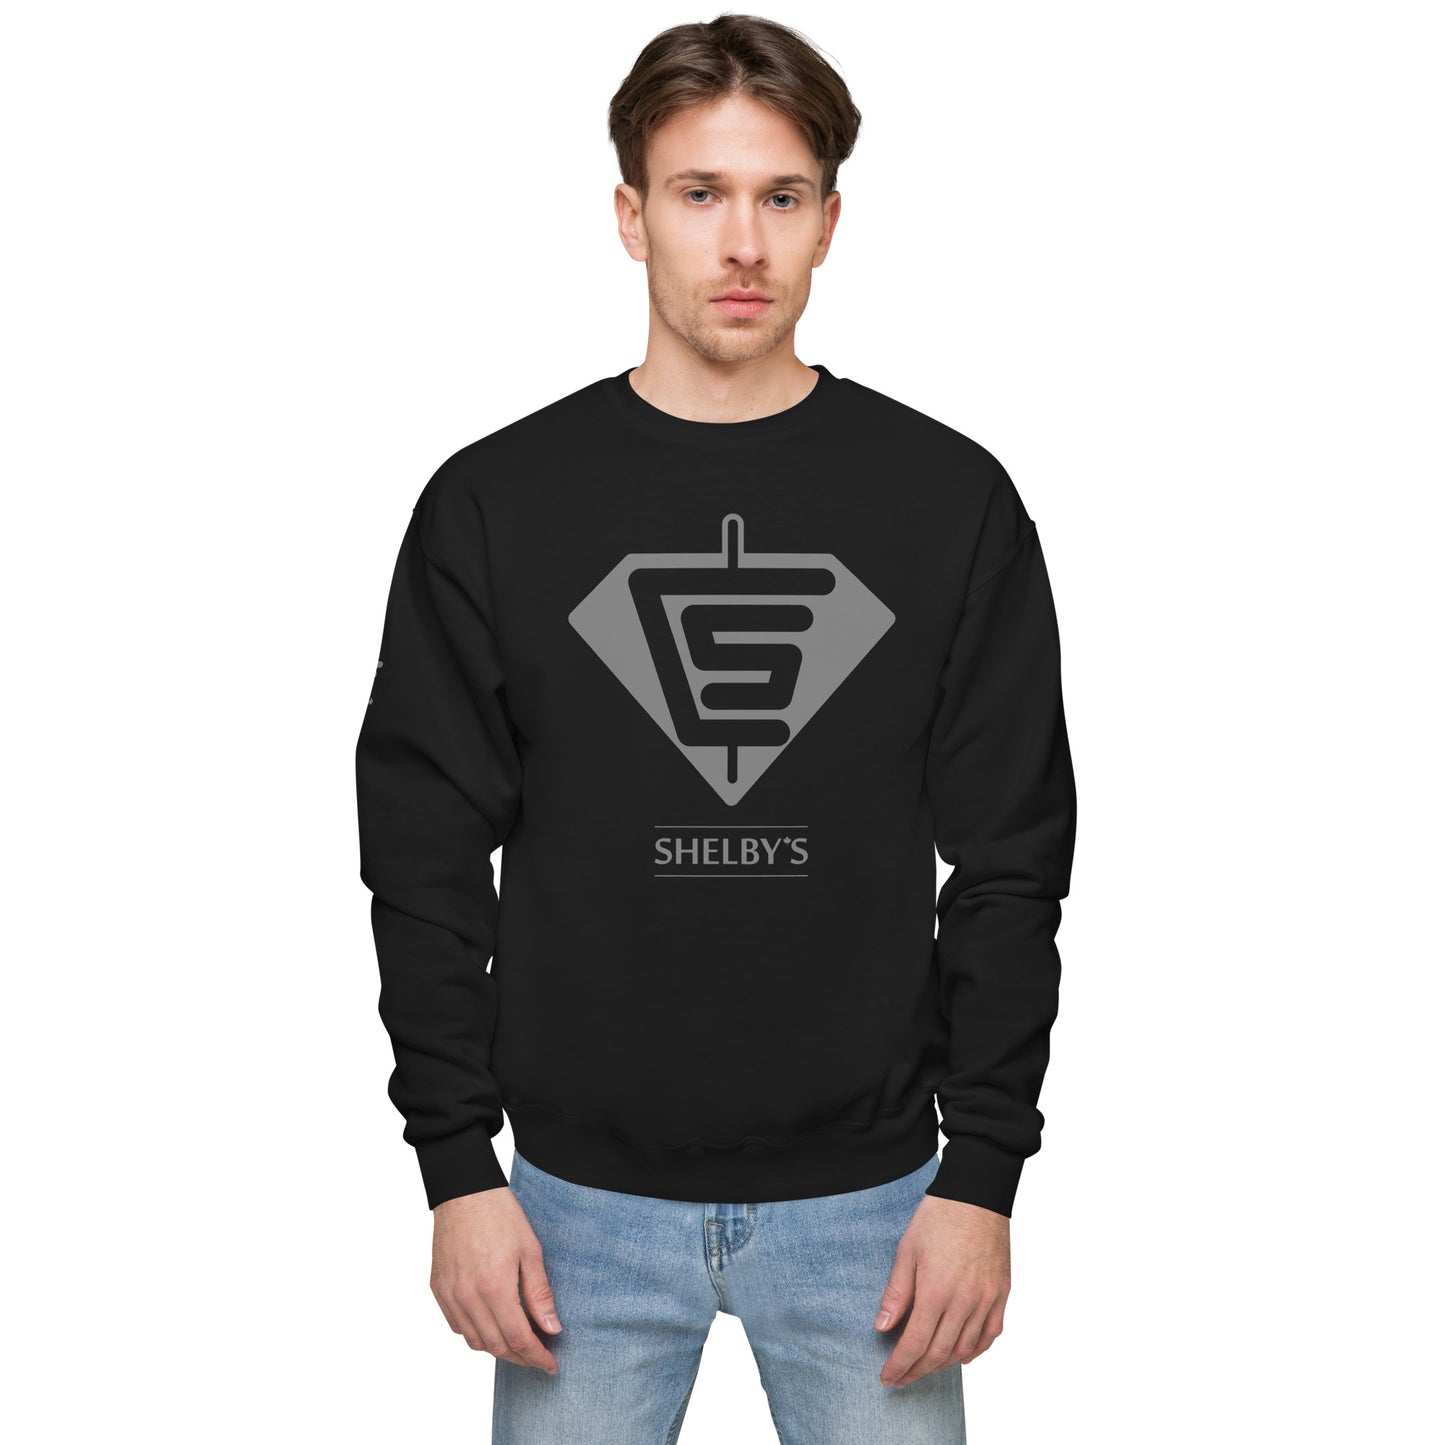 Super Shelby's - Sweatshirt